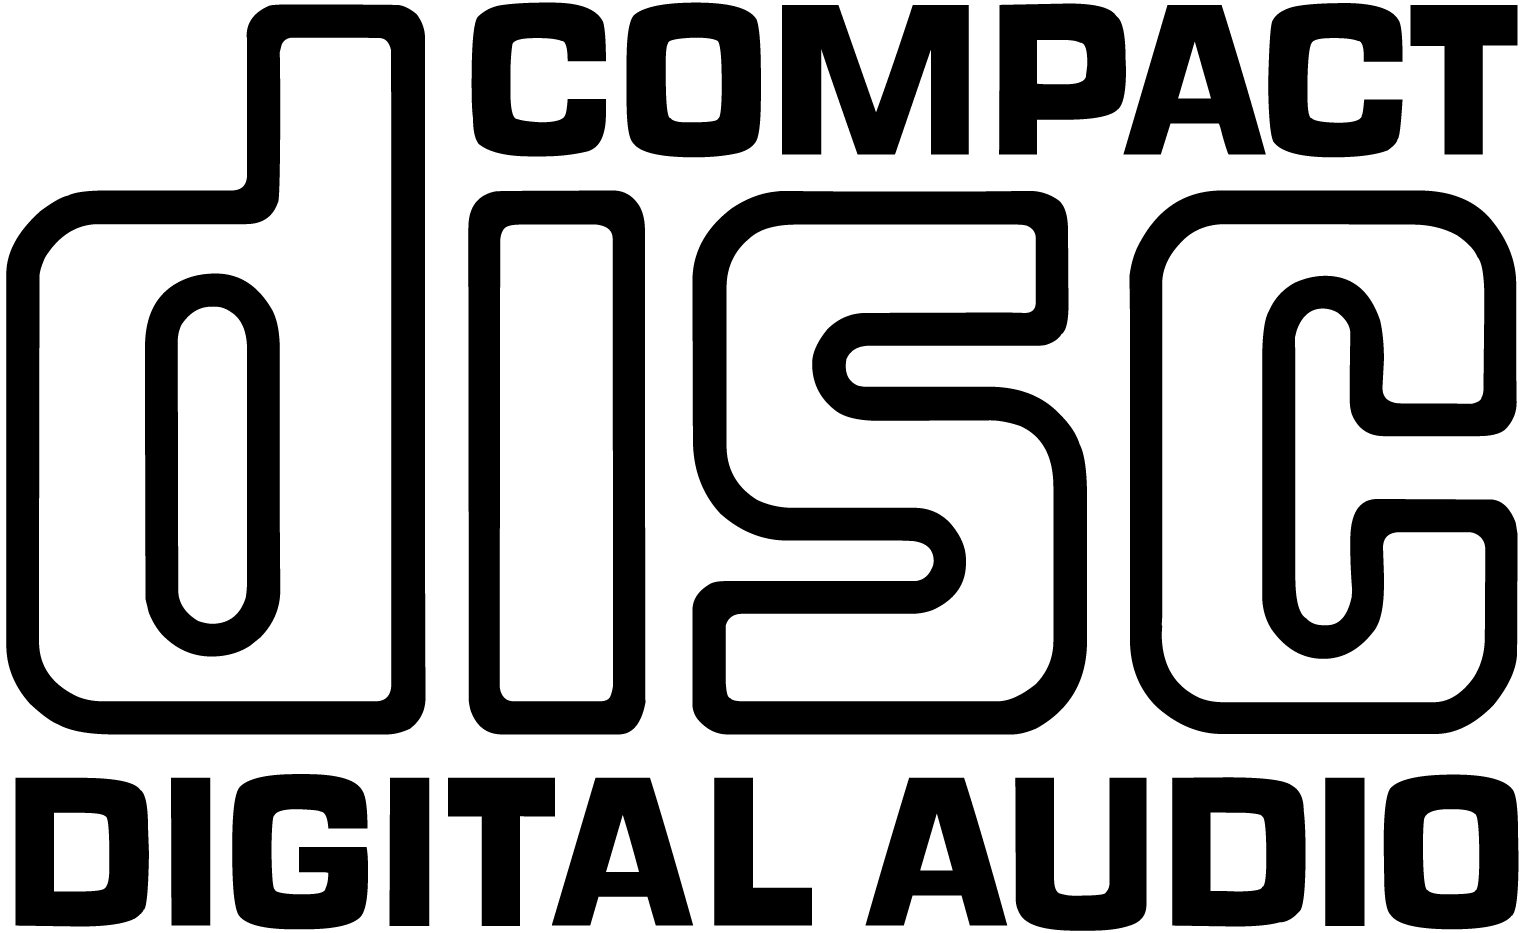 Compact Disk Logo PNG Transparent Image